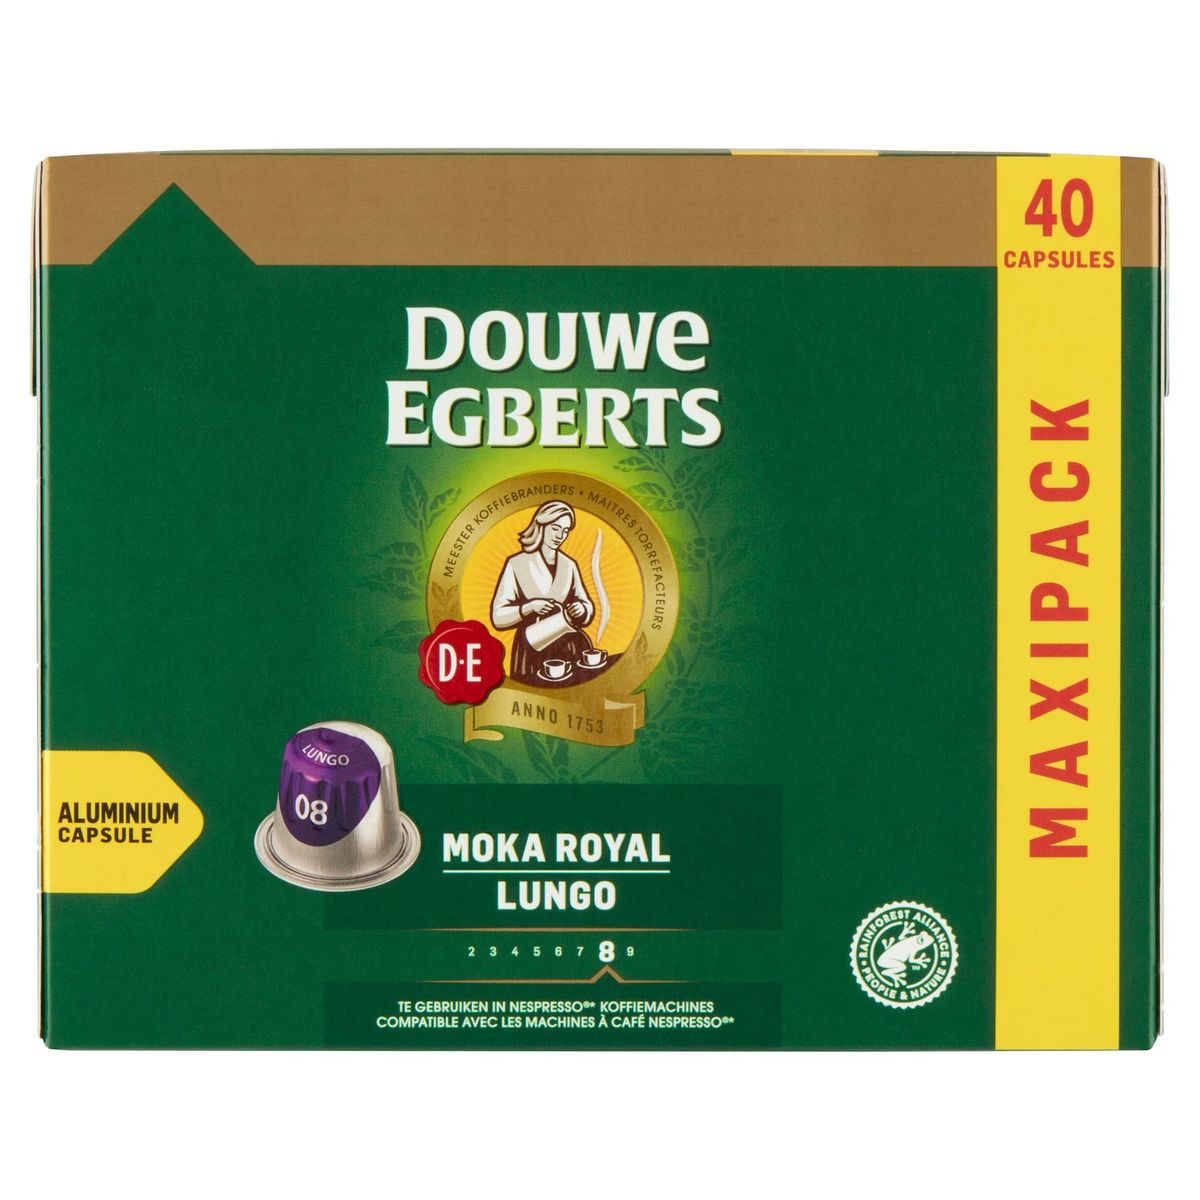 DOUWE EGBERTS Koffie Capsules Moka Royal Lungo Intensiteit 08 Nespresso®* Compatibel 40 stuks